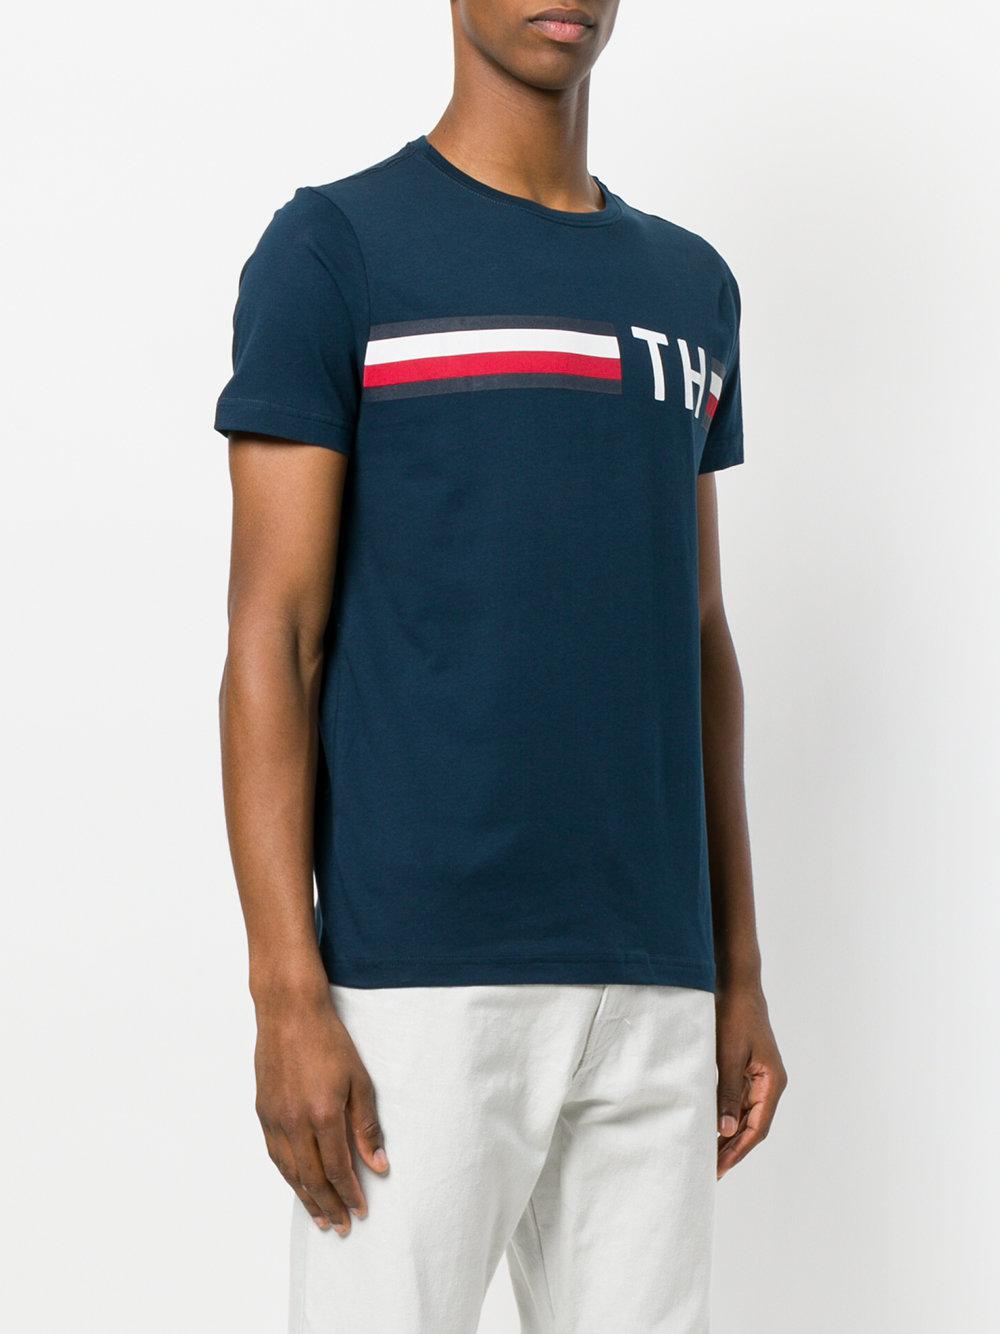 Tommy Hilfiger Cotton Logo Print T-shirt in Blue for Men - Lyst